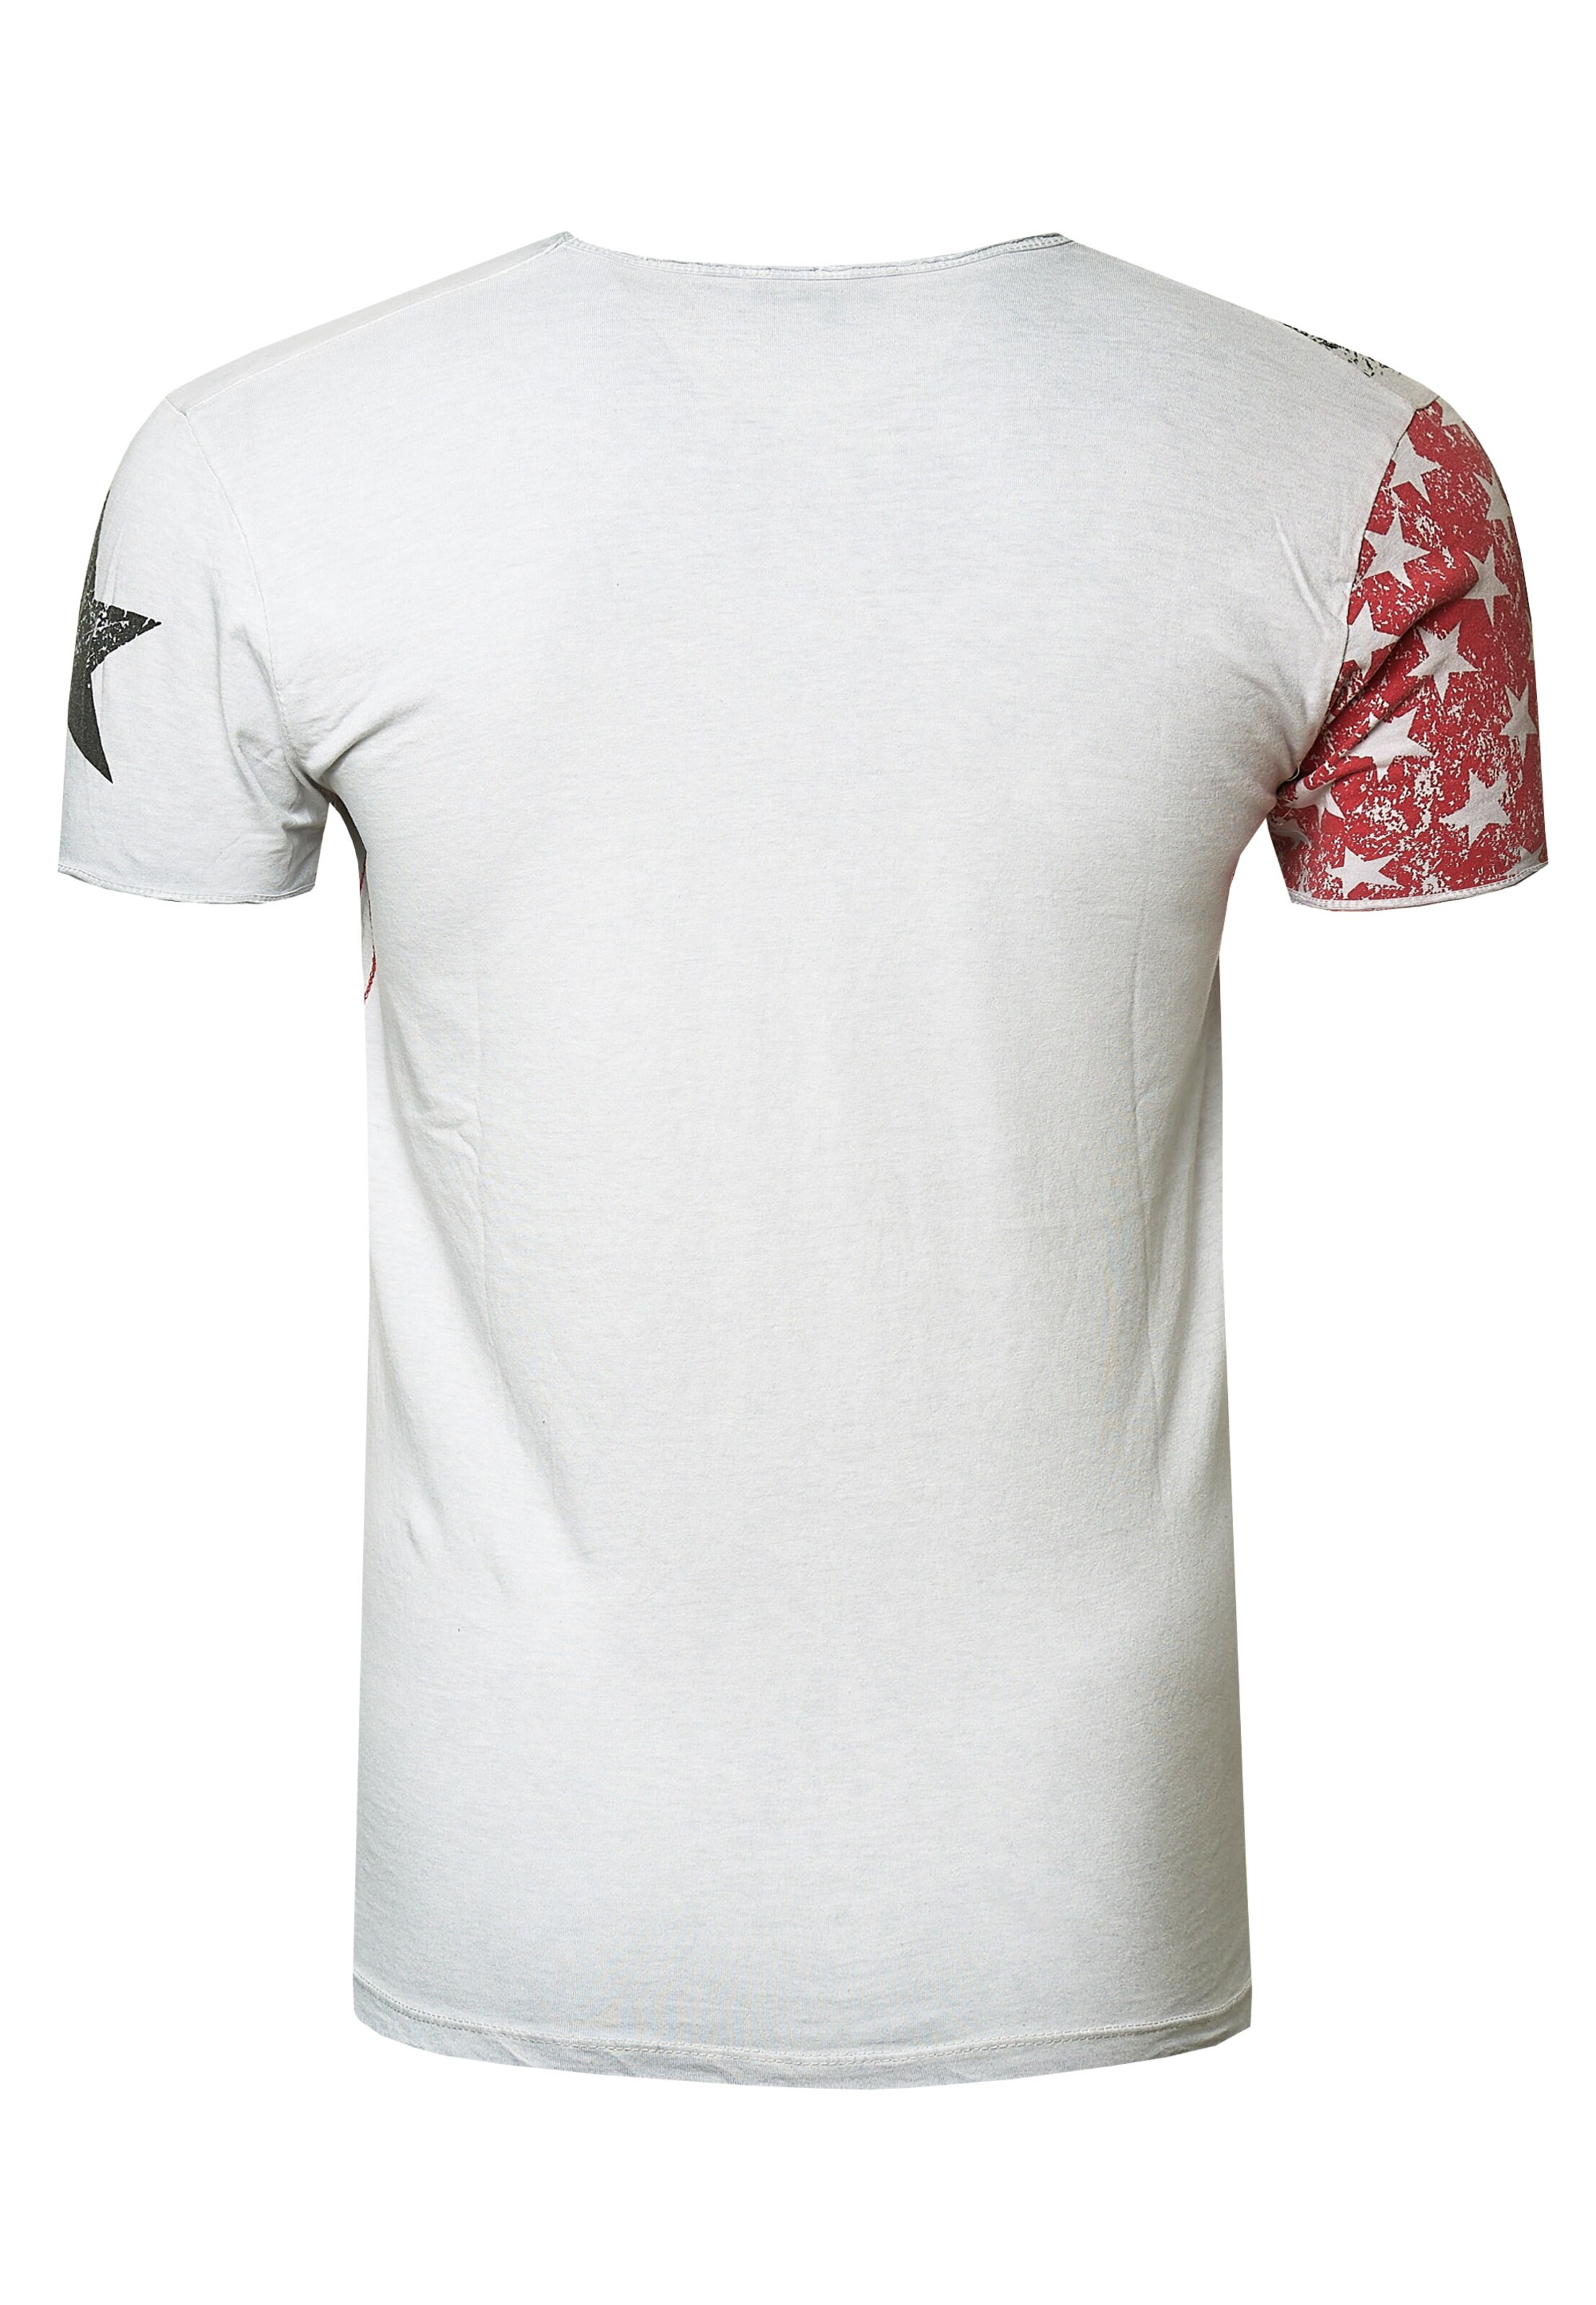 Männer Große Größen Rusty Neal Cooles T-Shirt mit V-Ausschnitt in Weiß - RU79576